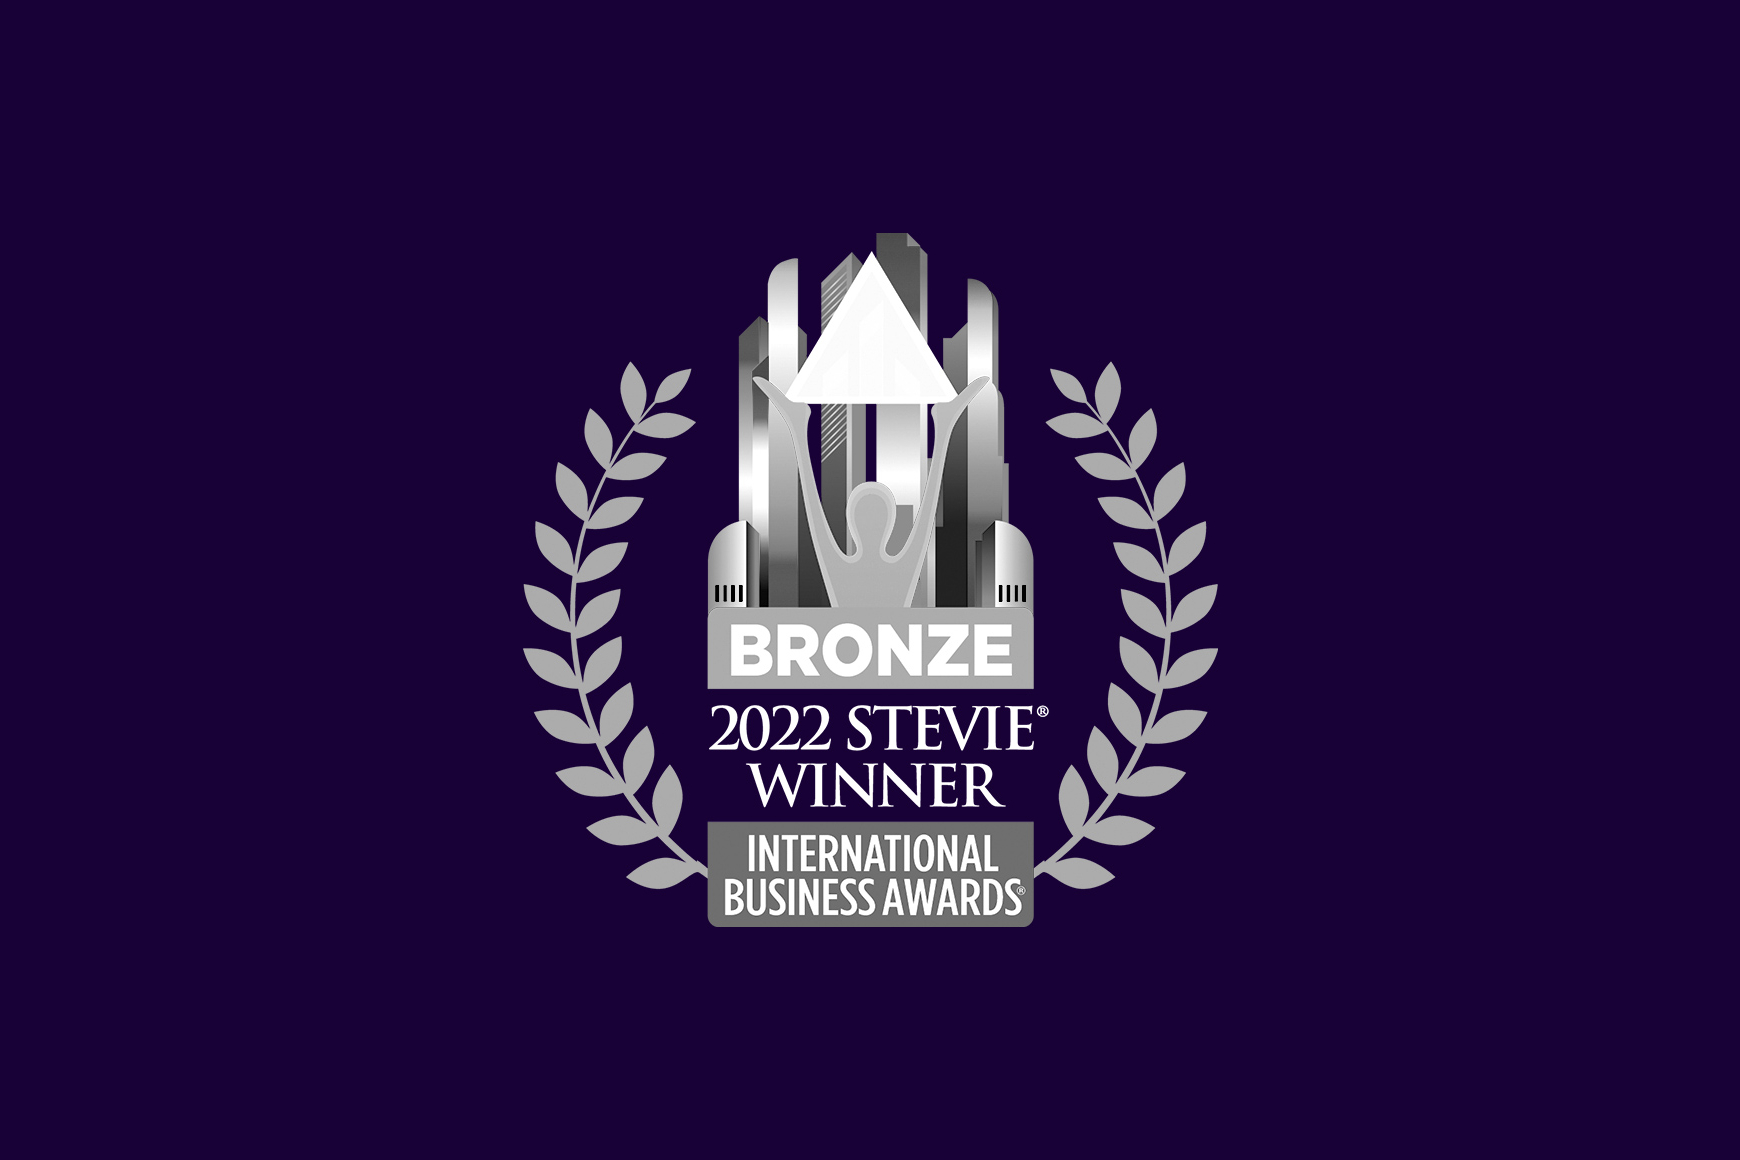 Talkdesk Healthcare Experience Cloud Wins 2022 Bronze Stevie International Business Award